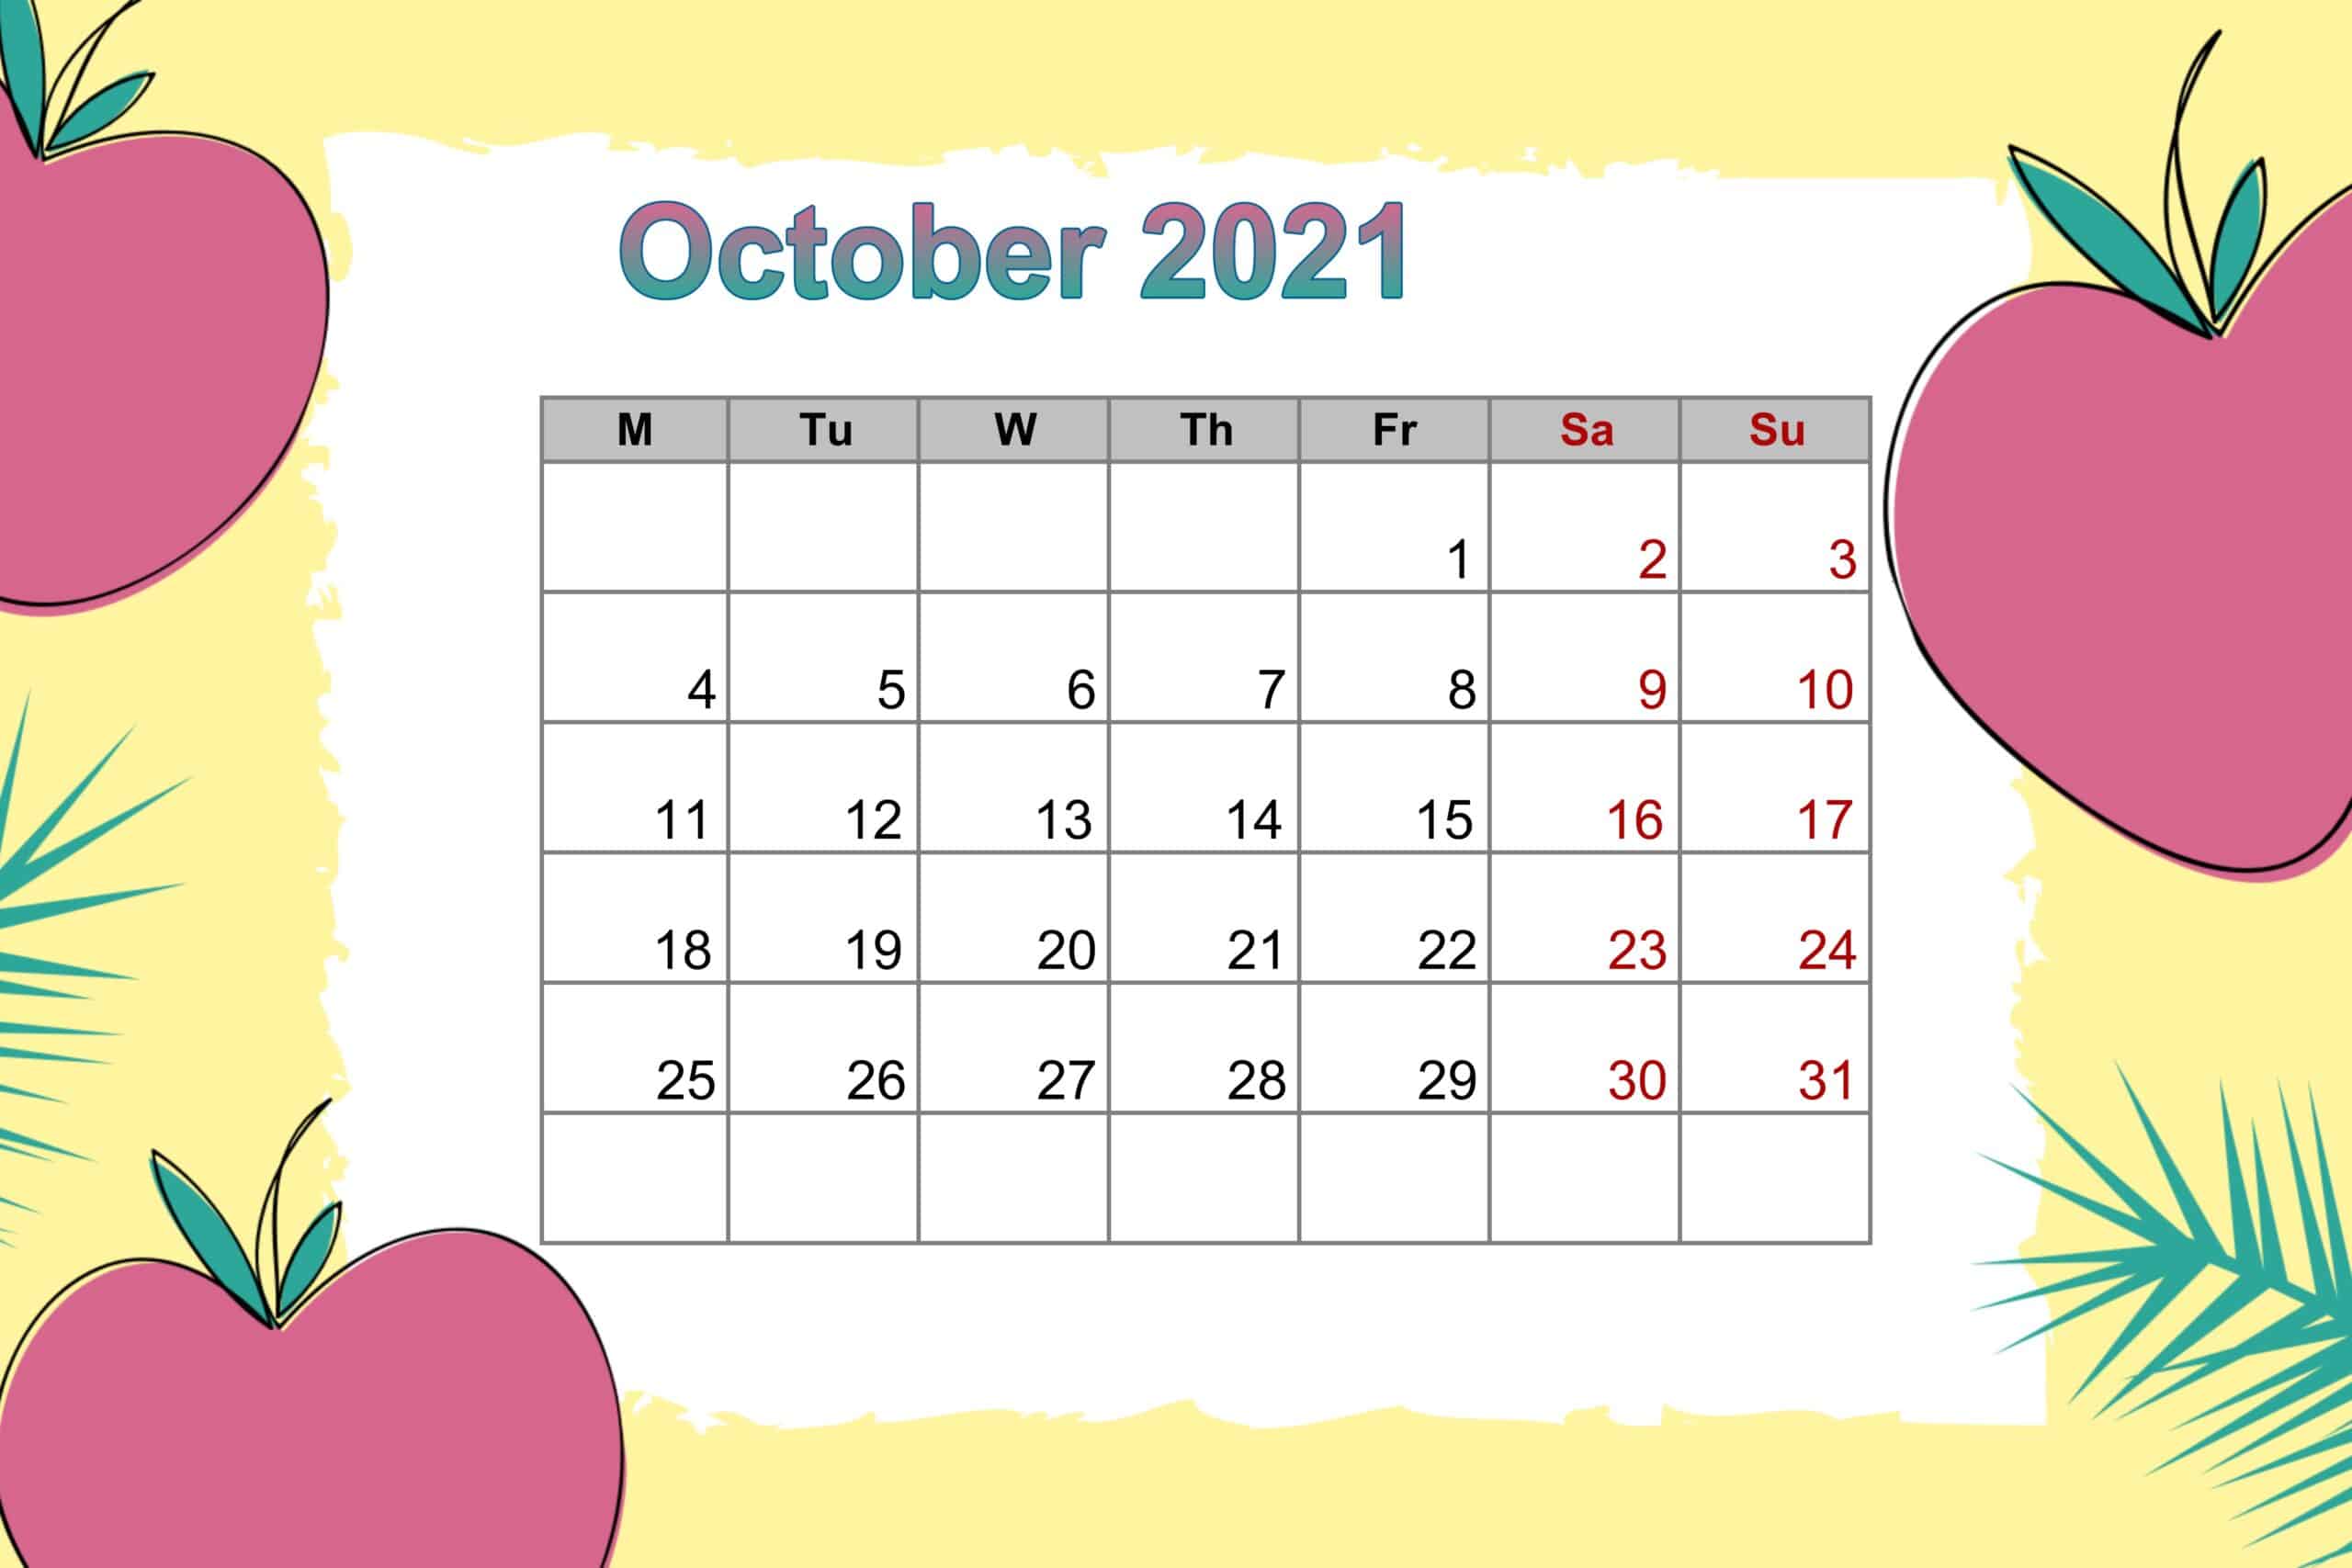 October 2021 Floral Calendar